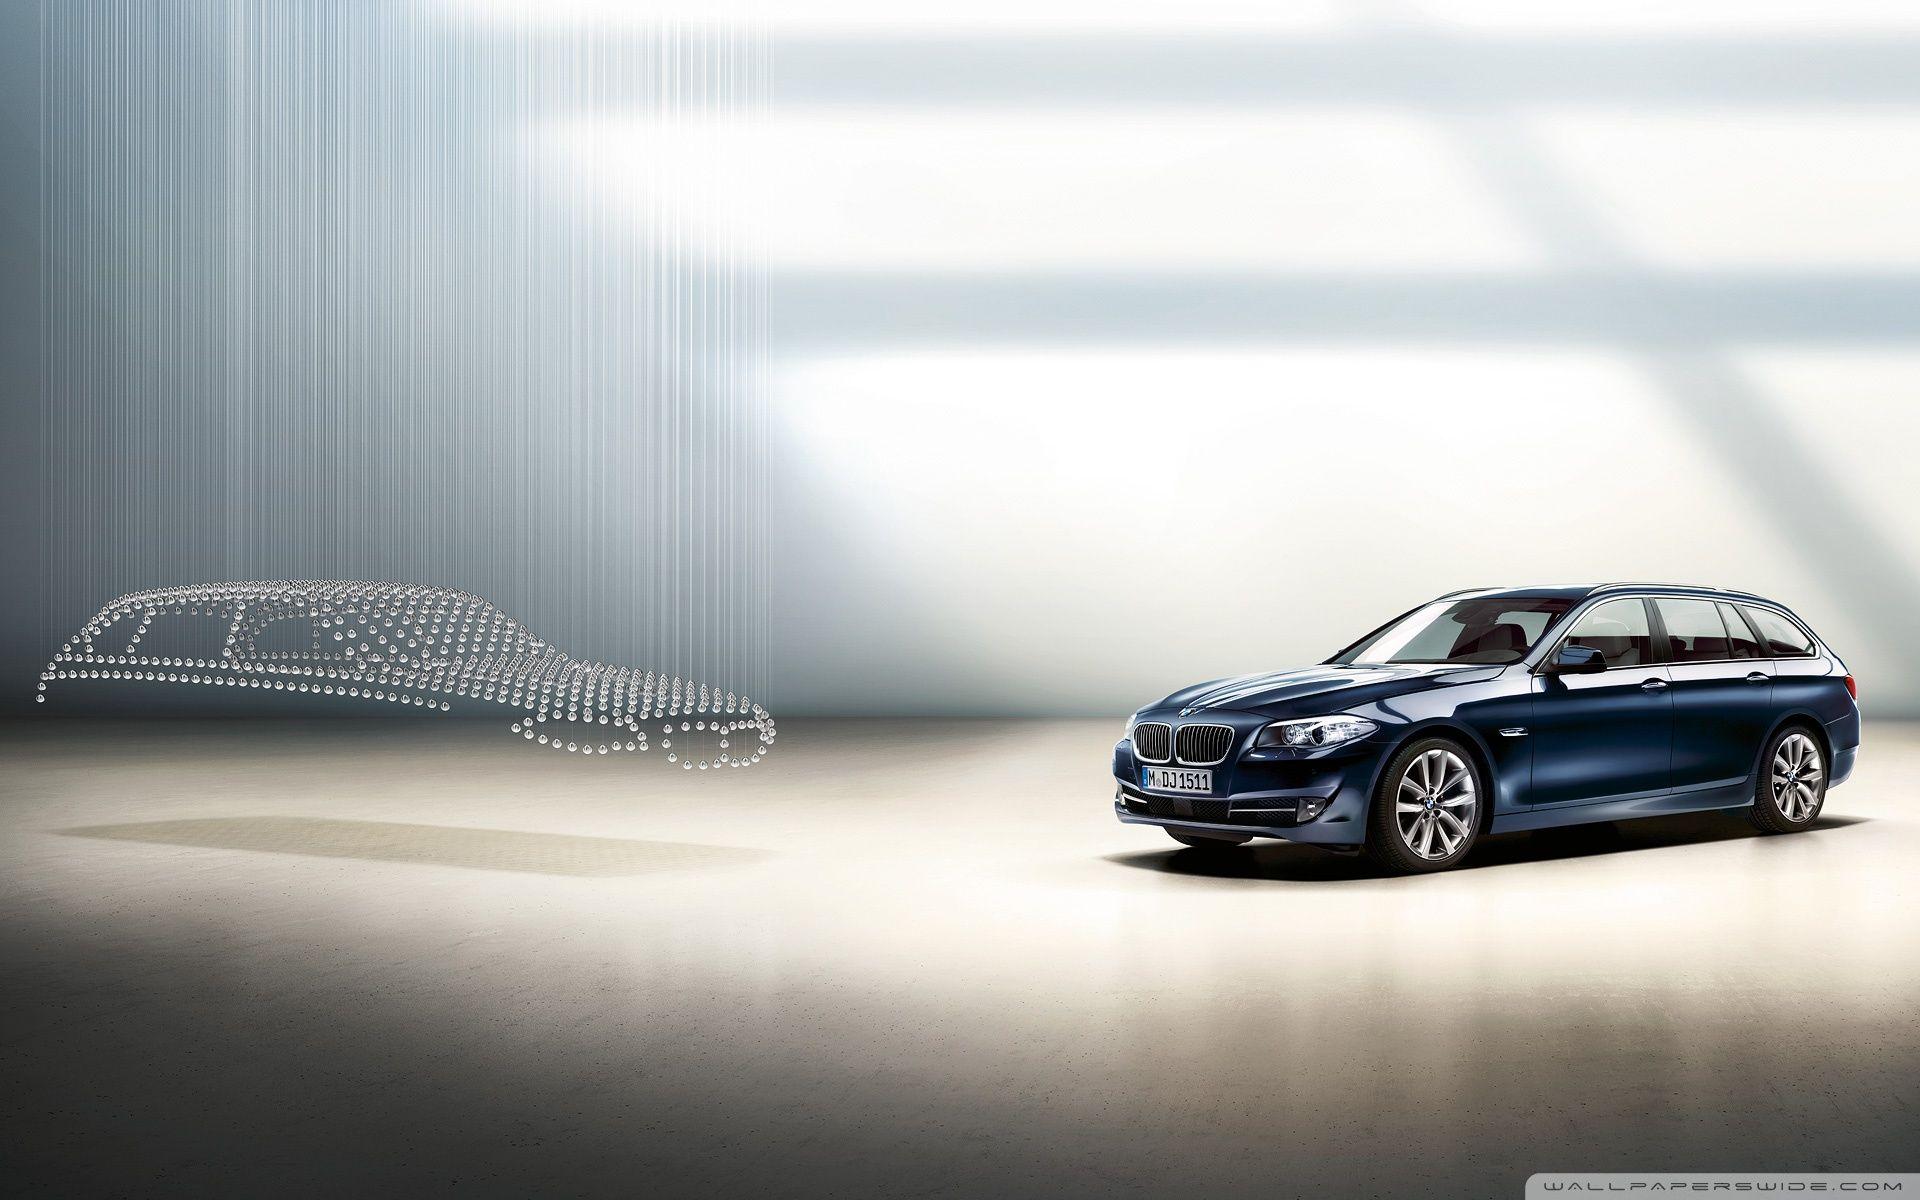 BMW 5 Series Touring ❤ 4K HD Desktop Wallpaper for 4K Ultra HD TV